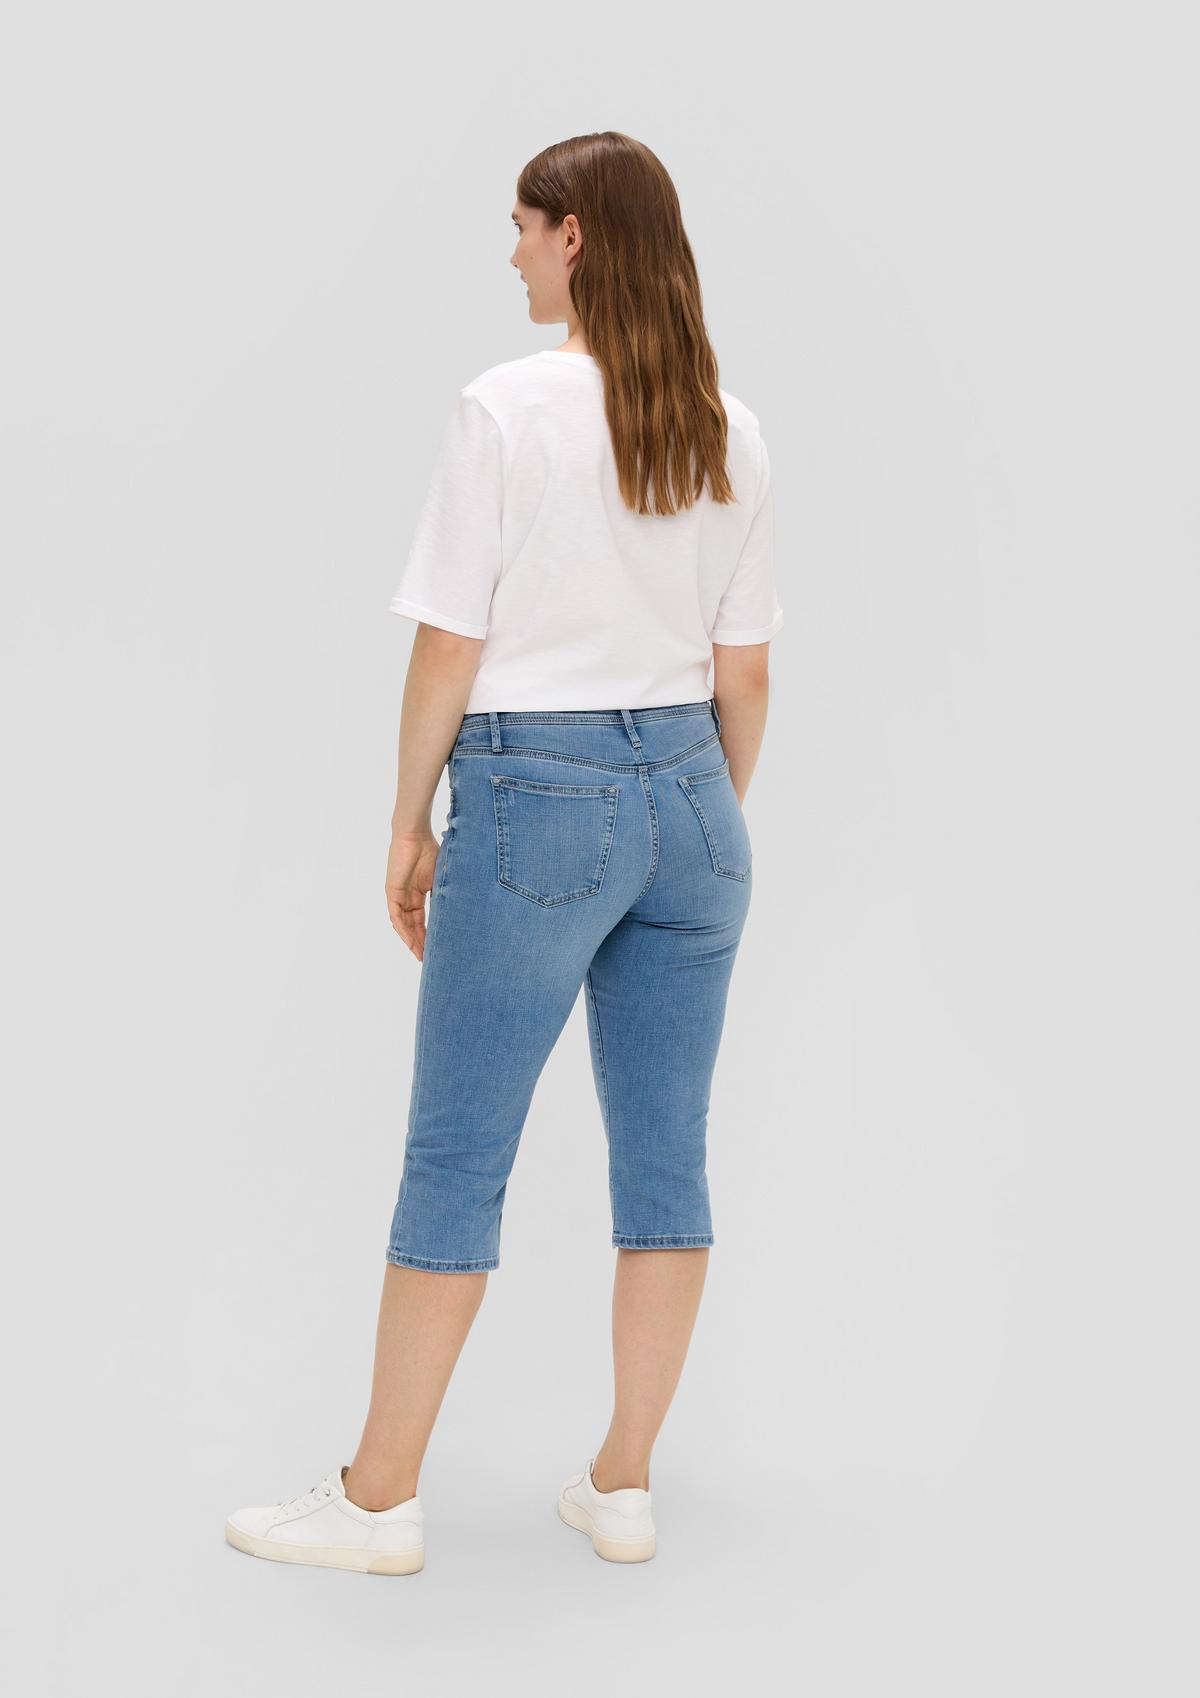 s.Oliver Capri jeans / regular fit / mid rise / slim leg